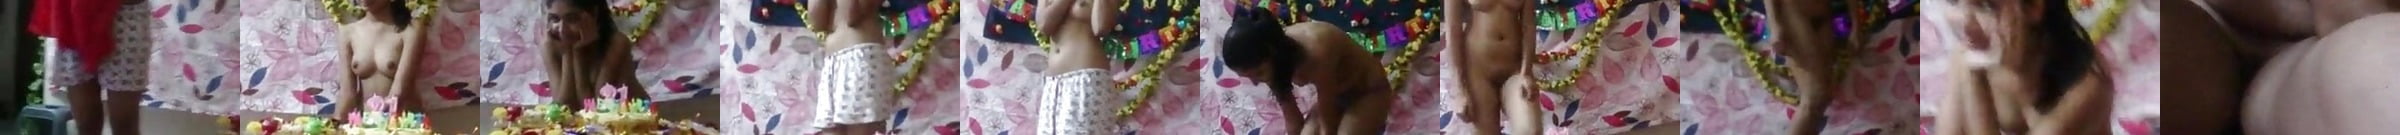 Srilanka Piumi Hansamali S Boobs Touching Ranjan Porn Ba